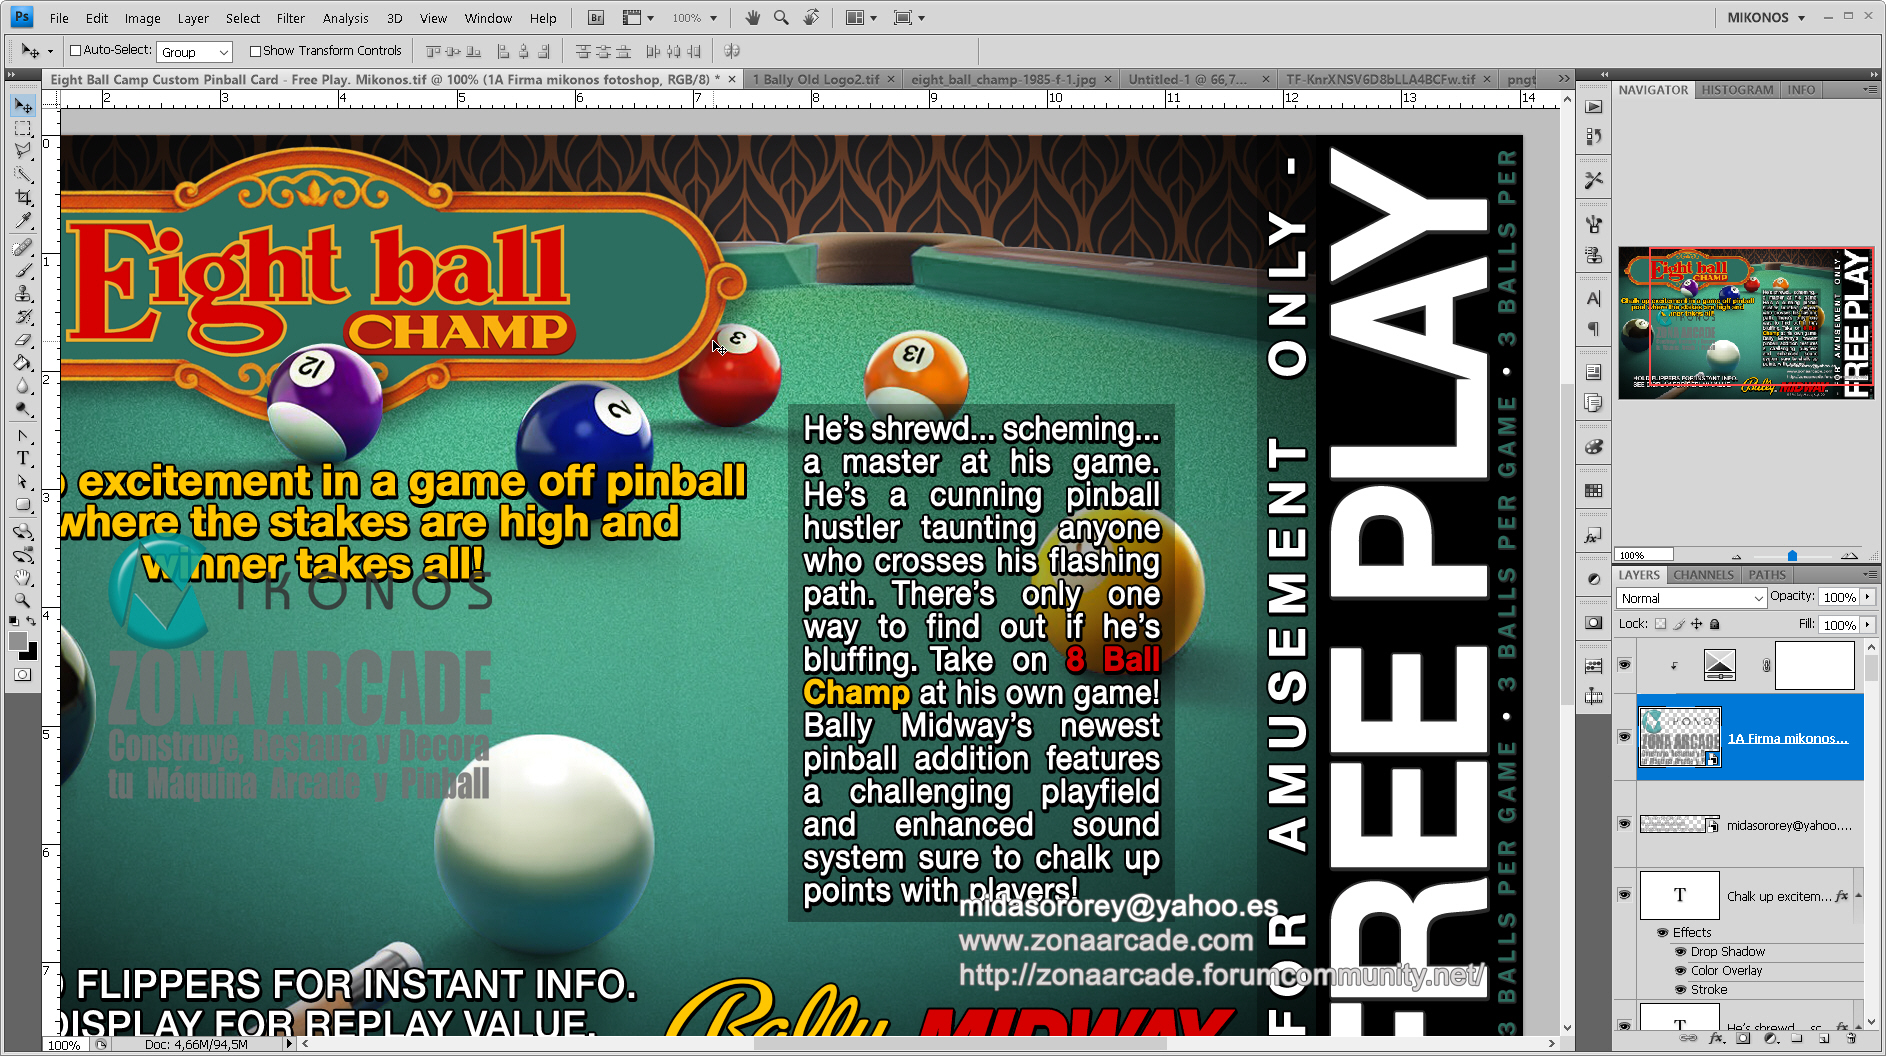 Eight Ball Champ Pinball Card Customized - Free Play. Mikonos2